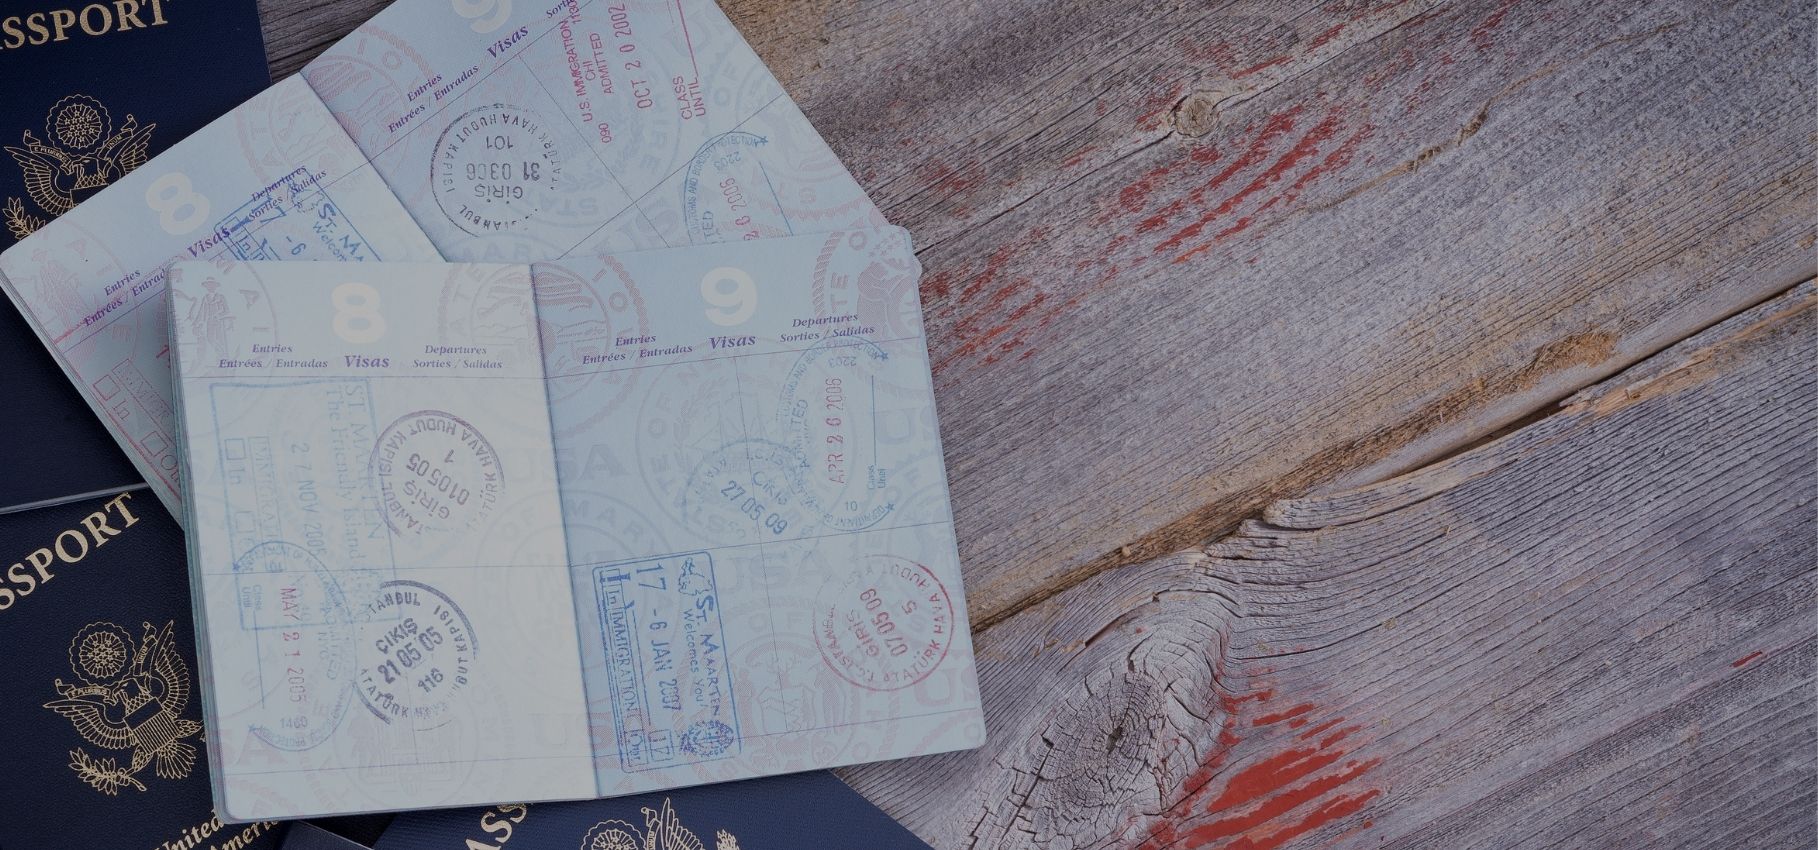 Passport renewal in India